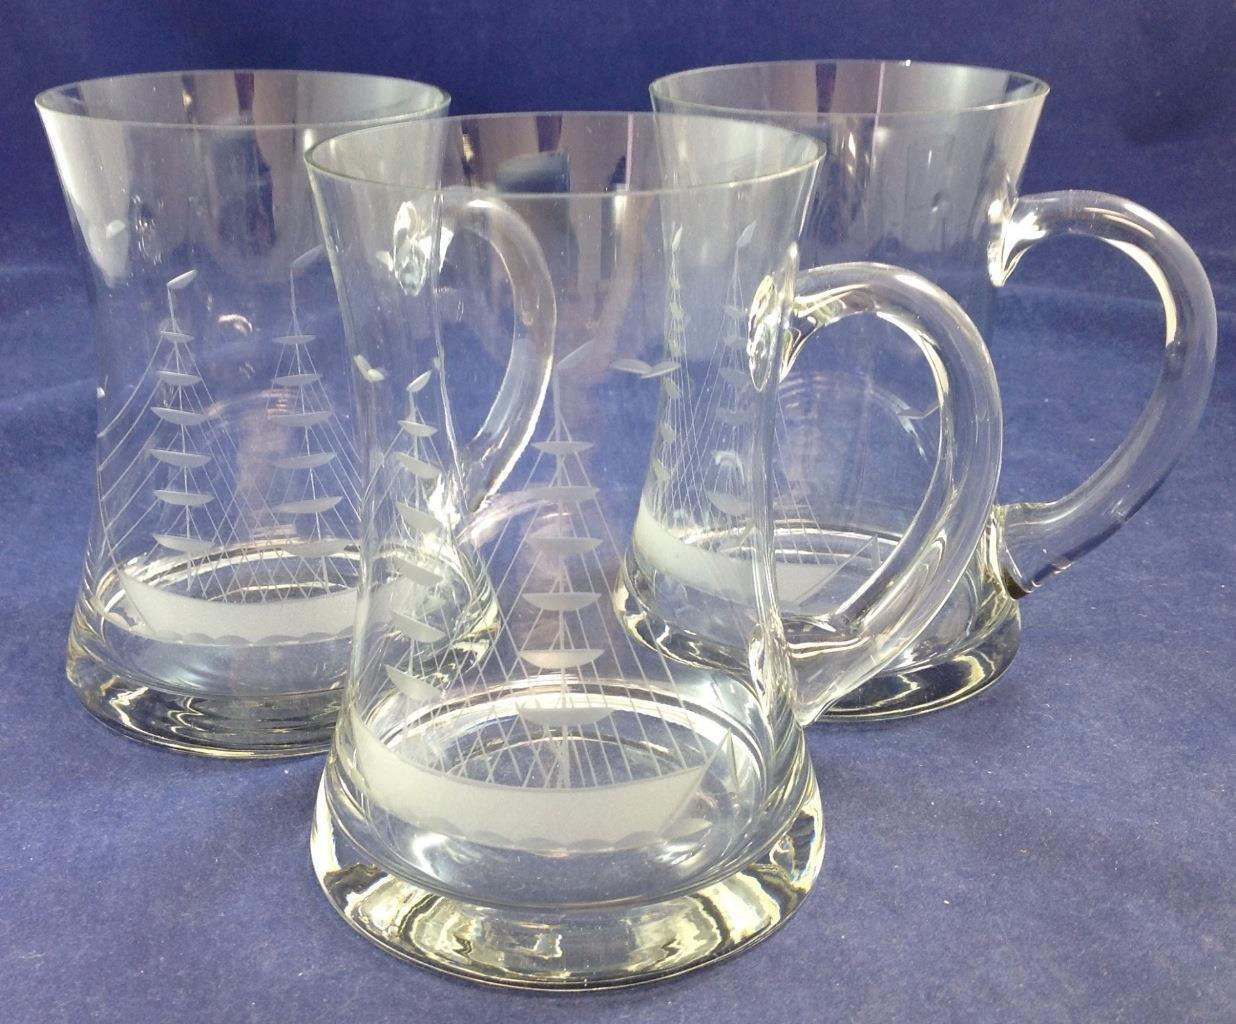 Glass mugs with nautical theme